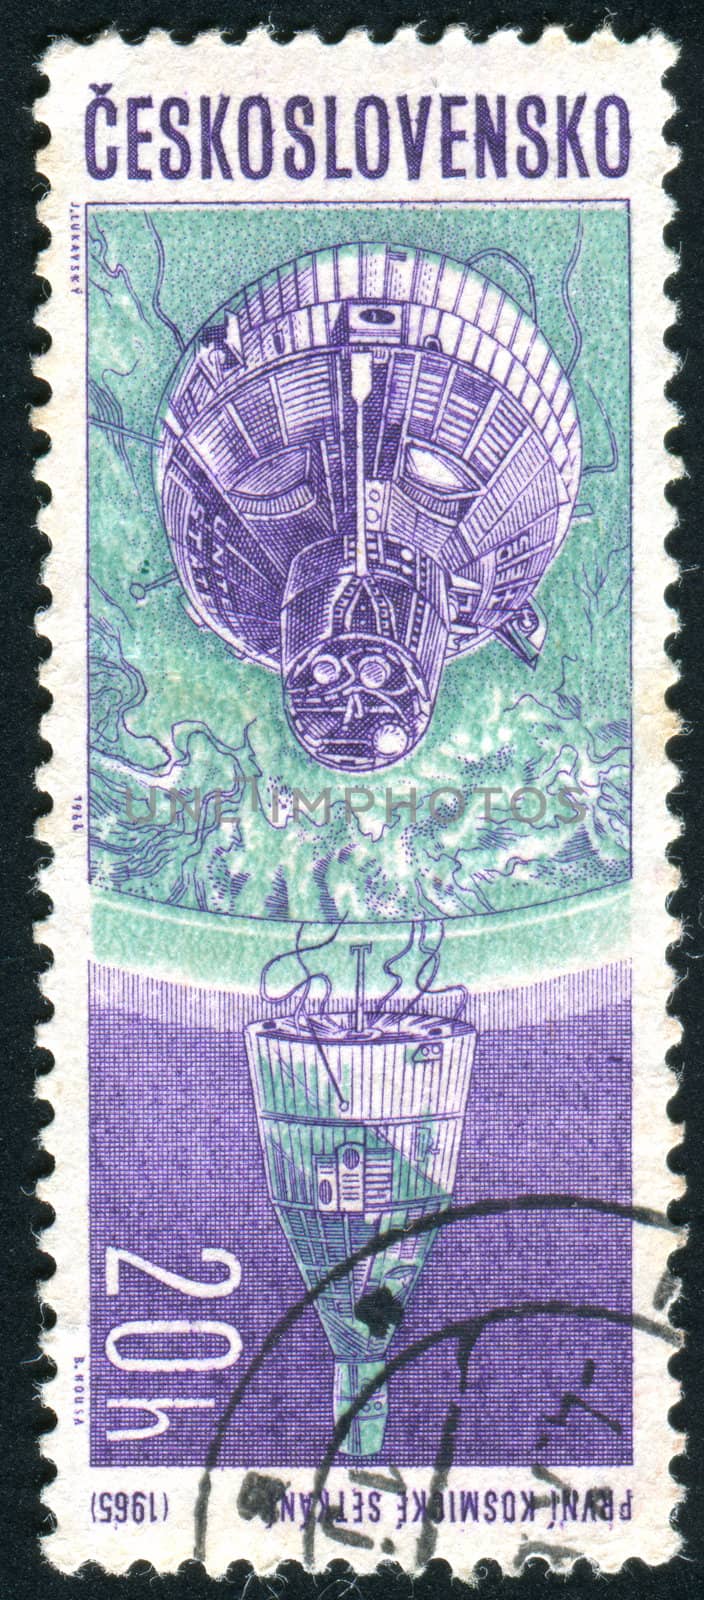 CZECHOSLOVAKIA - CIRCA 1966: stamp printed by Czechoslovakia, shows First Meeting in Orbit, circa 1966